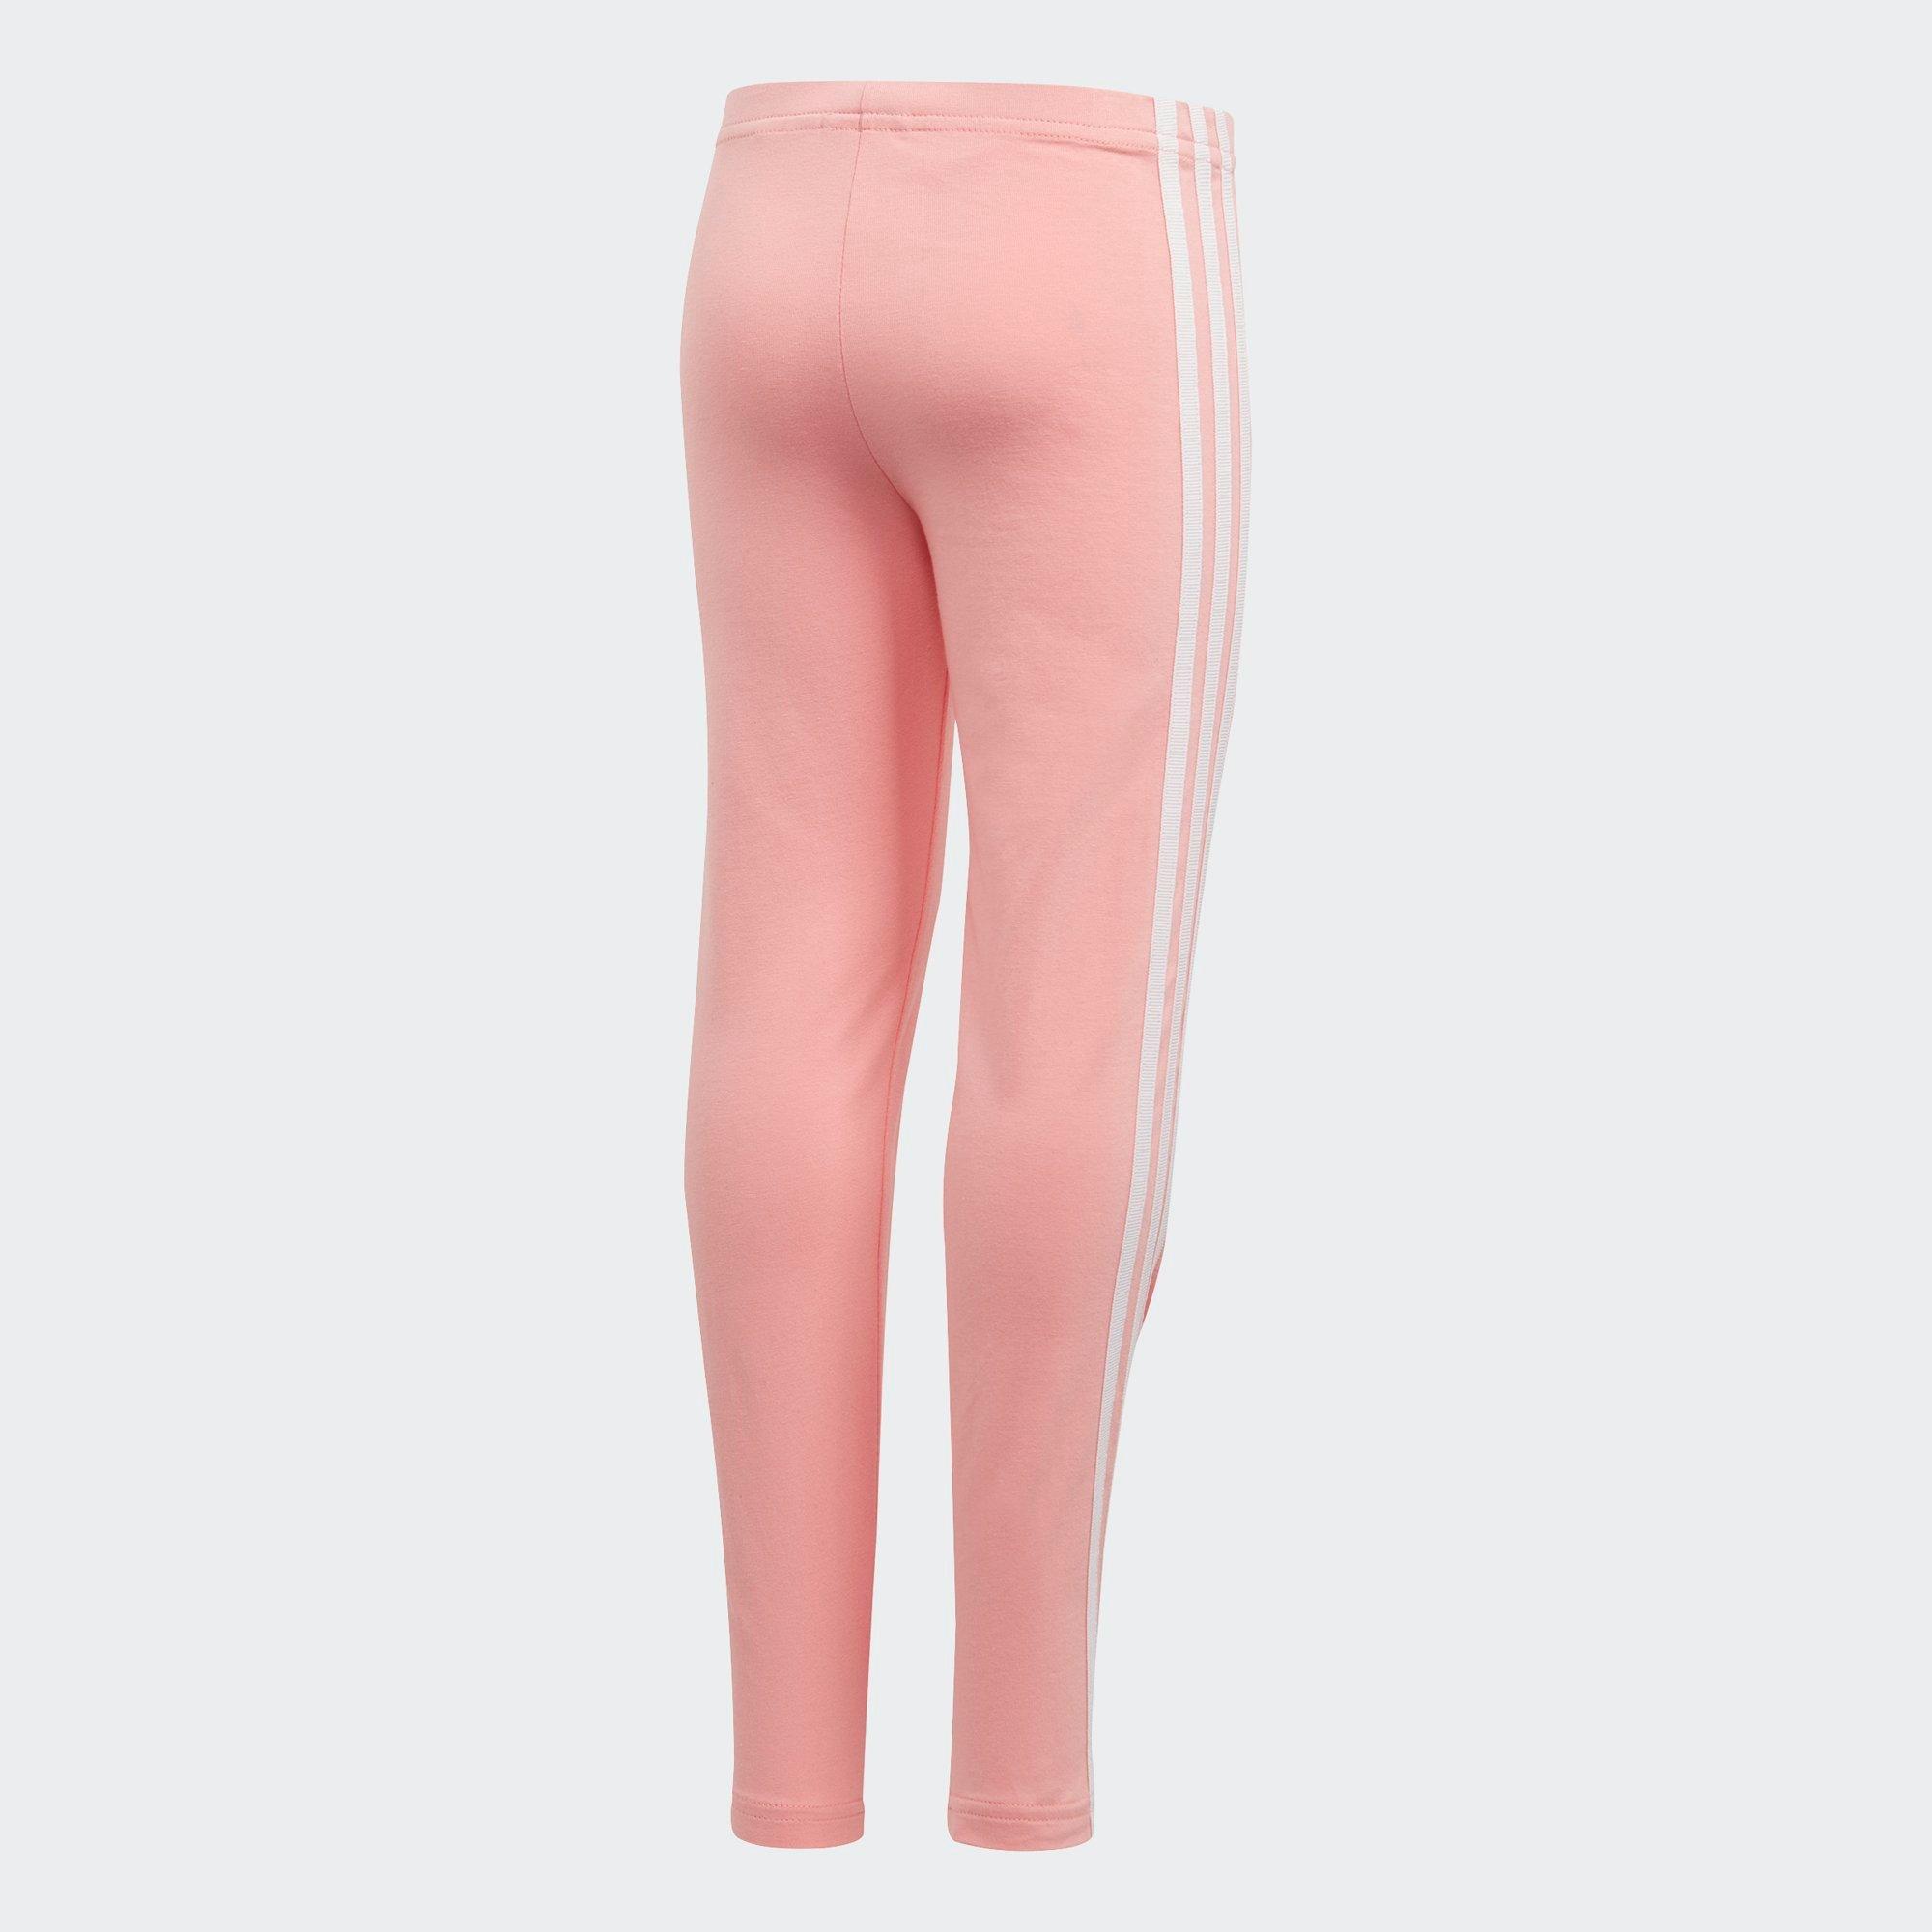 pink adidas leggings and shirt